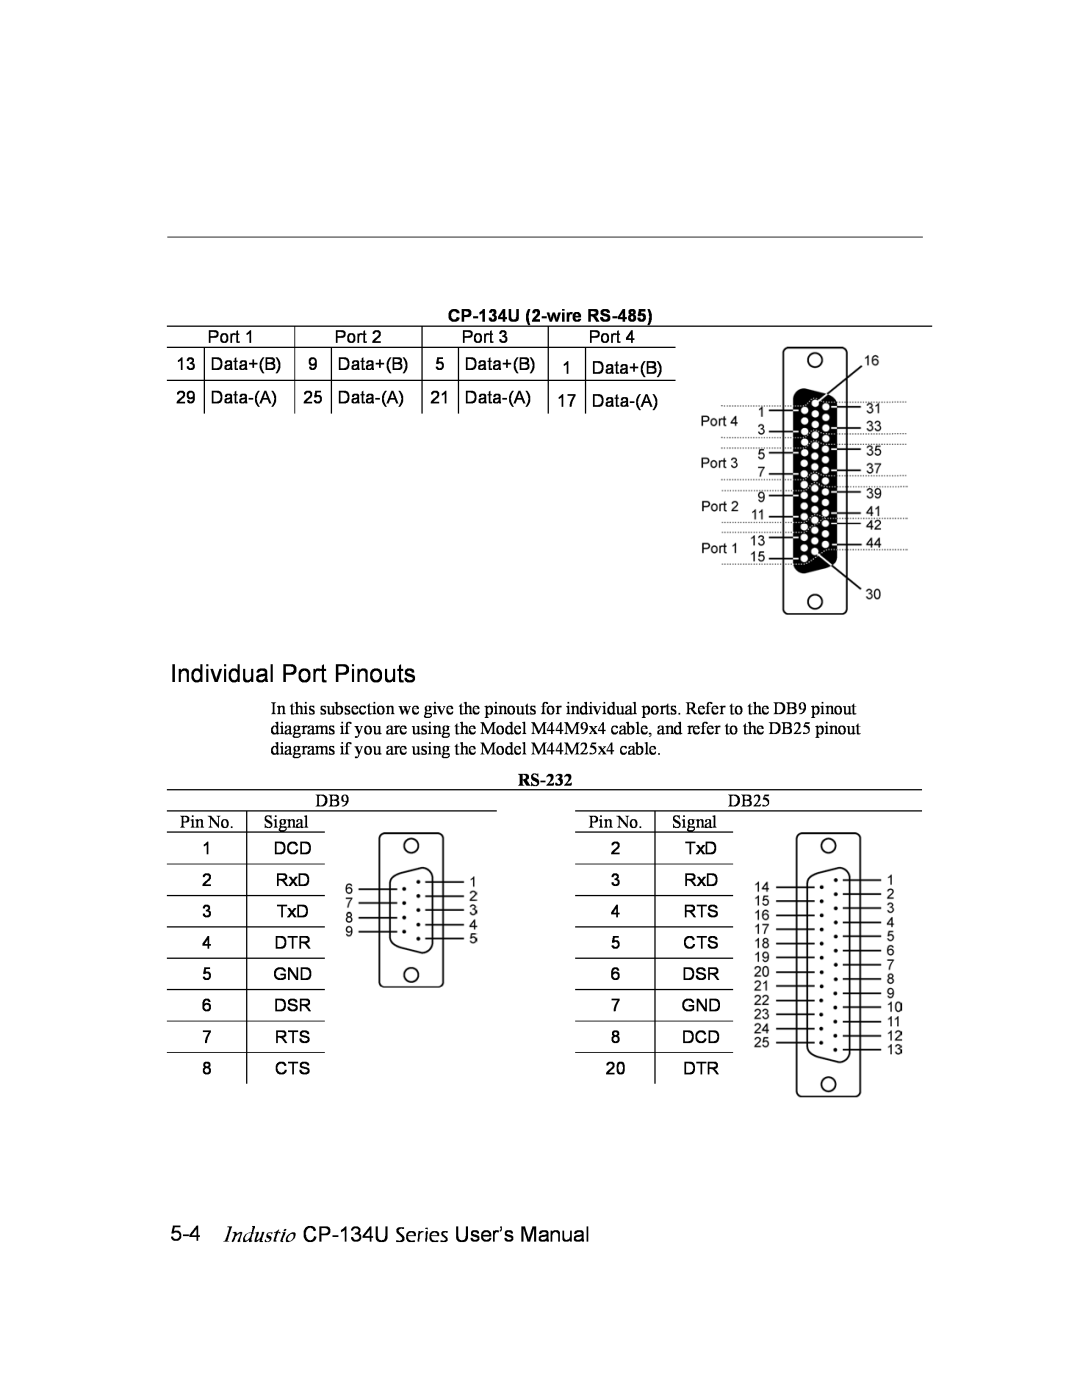 Moxa Technologies user manual Individual Port Pinouts, Industio CP-134U Series User’s Manual, CP-134U 2-wire RS-485 